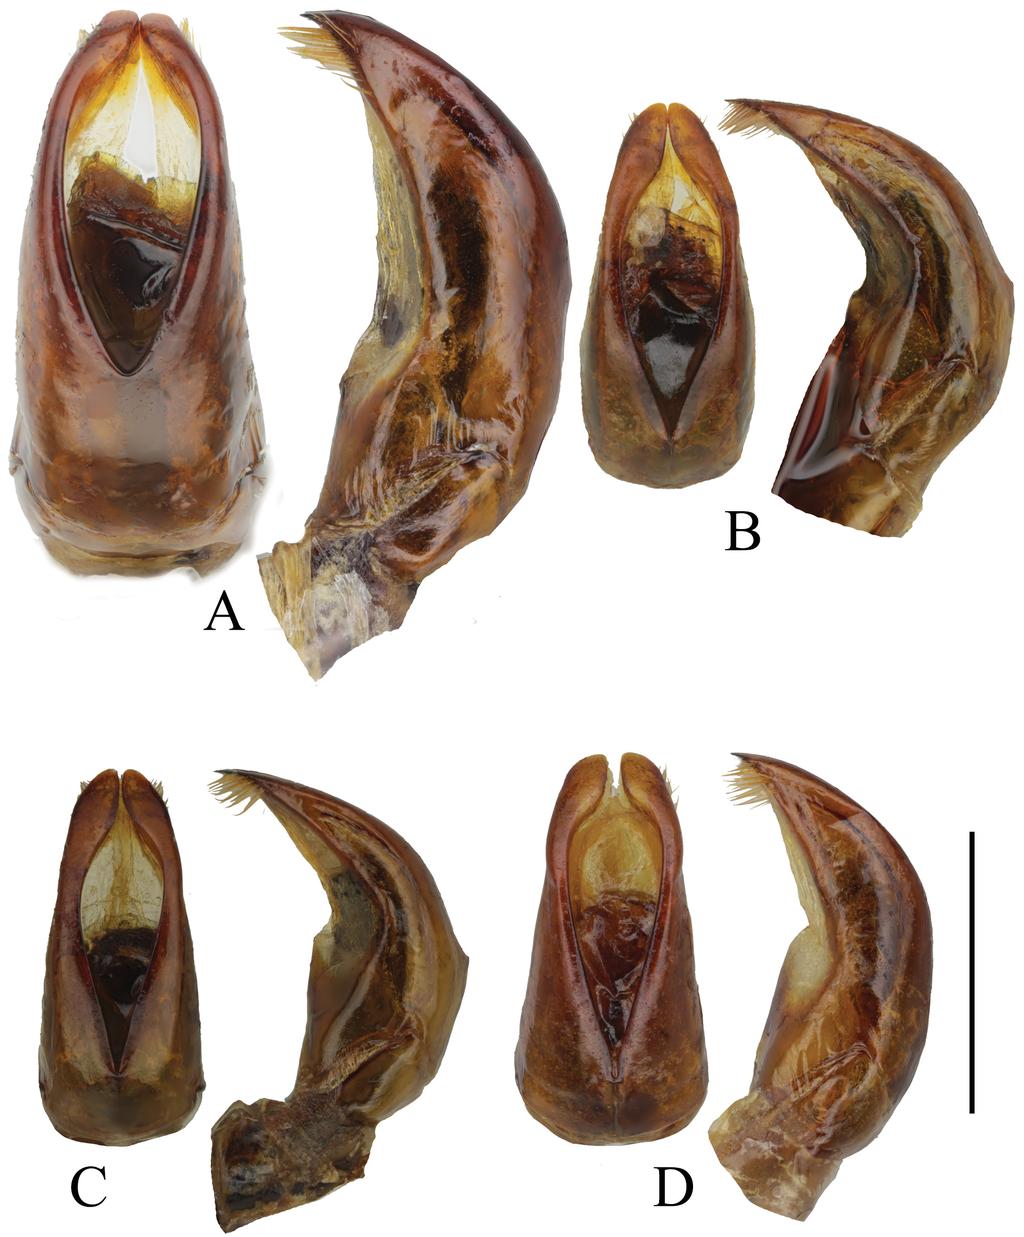 Acta Entomologica Musei Nationalis Pragae, 54 (supplementum), 2014 167 Figs 11A D.